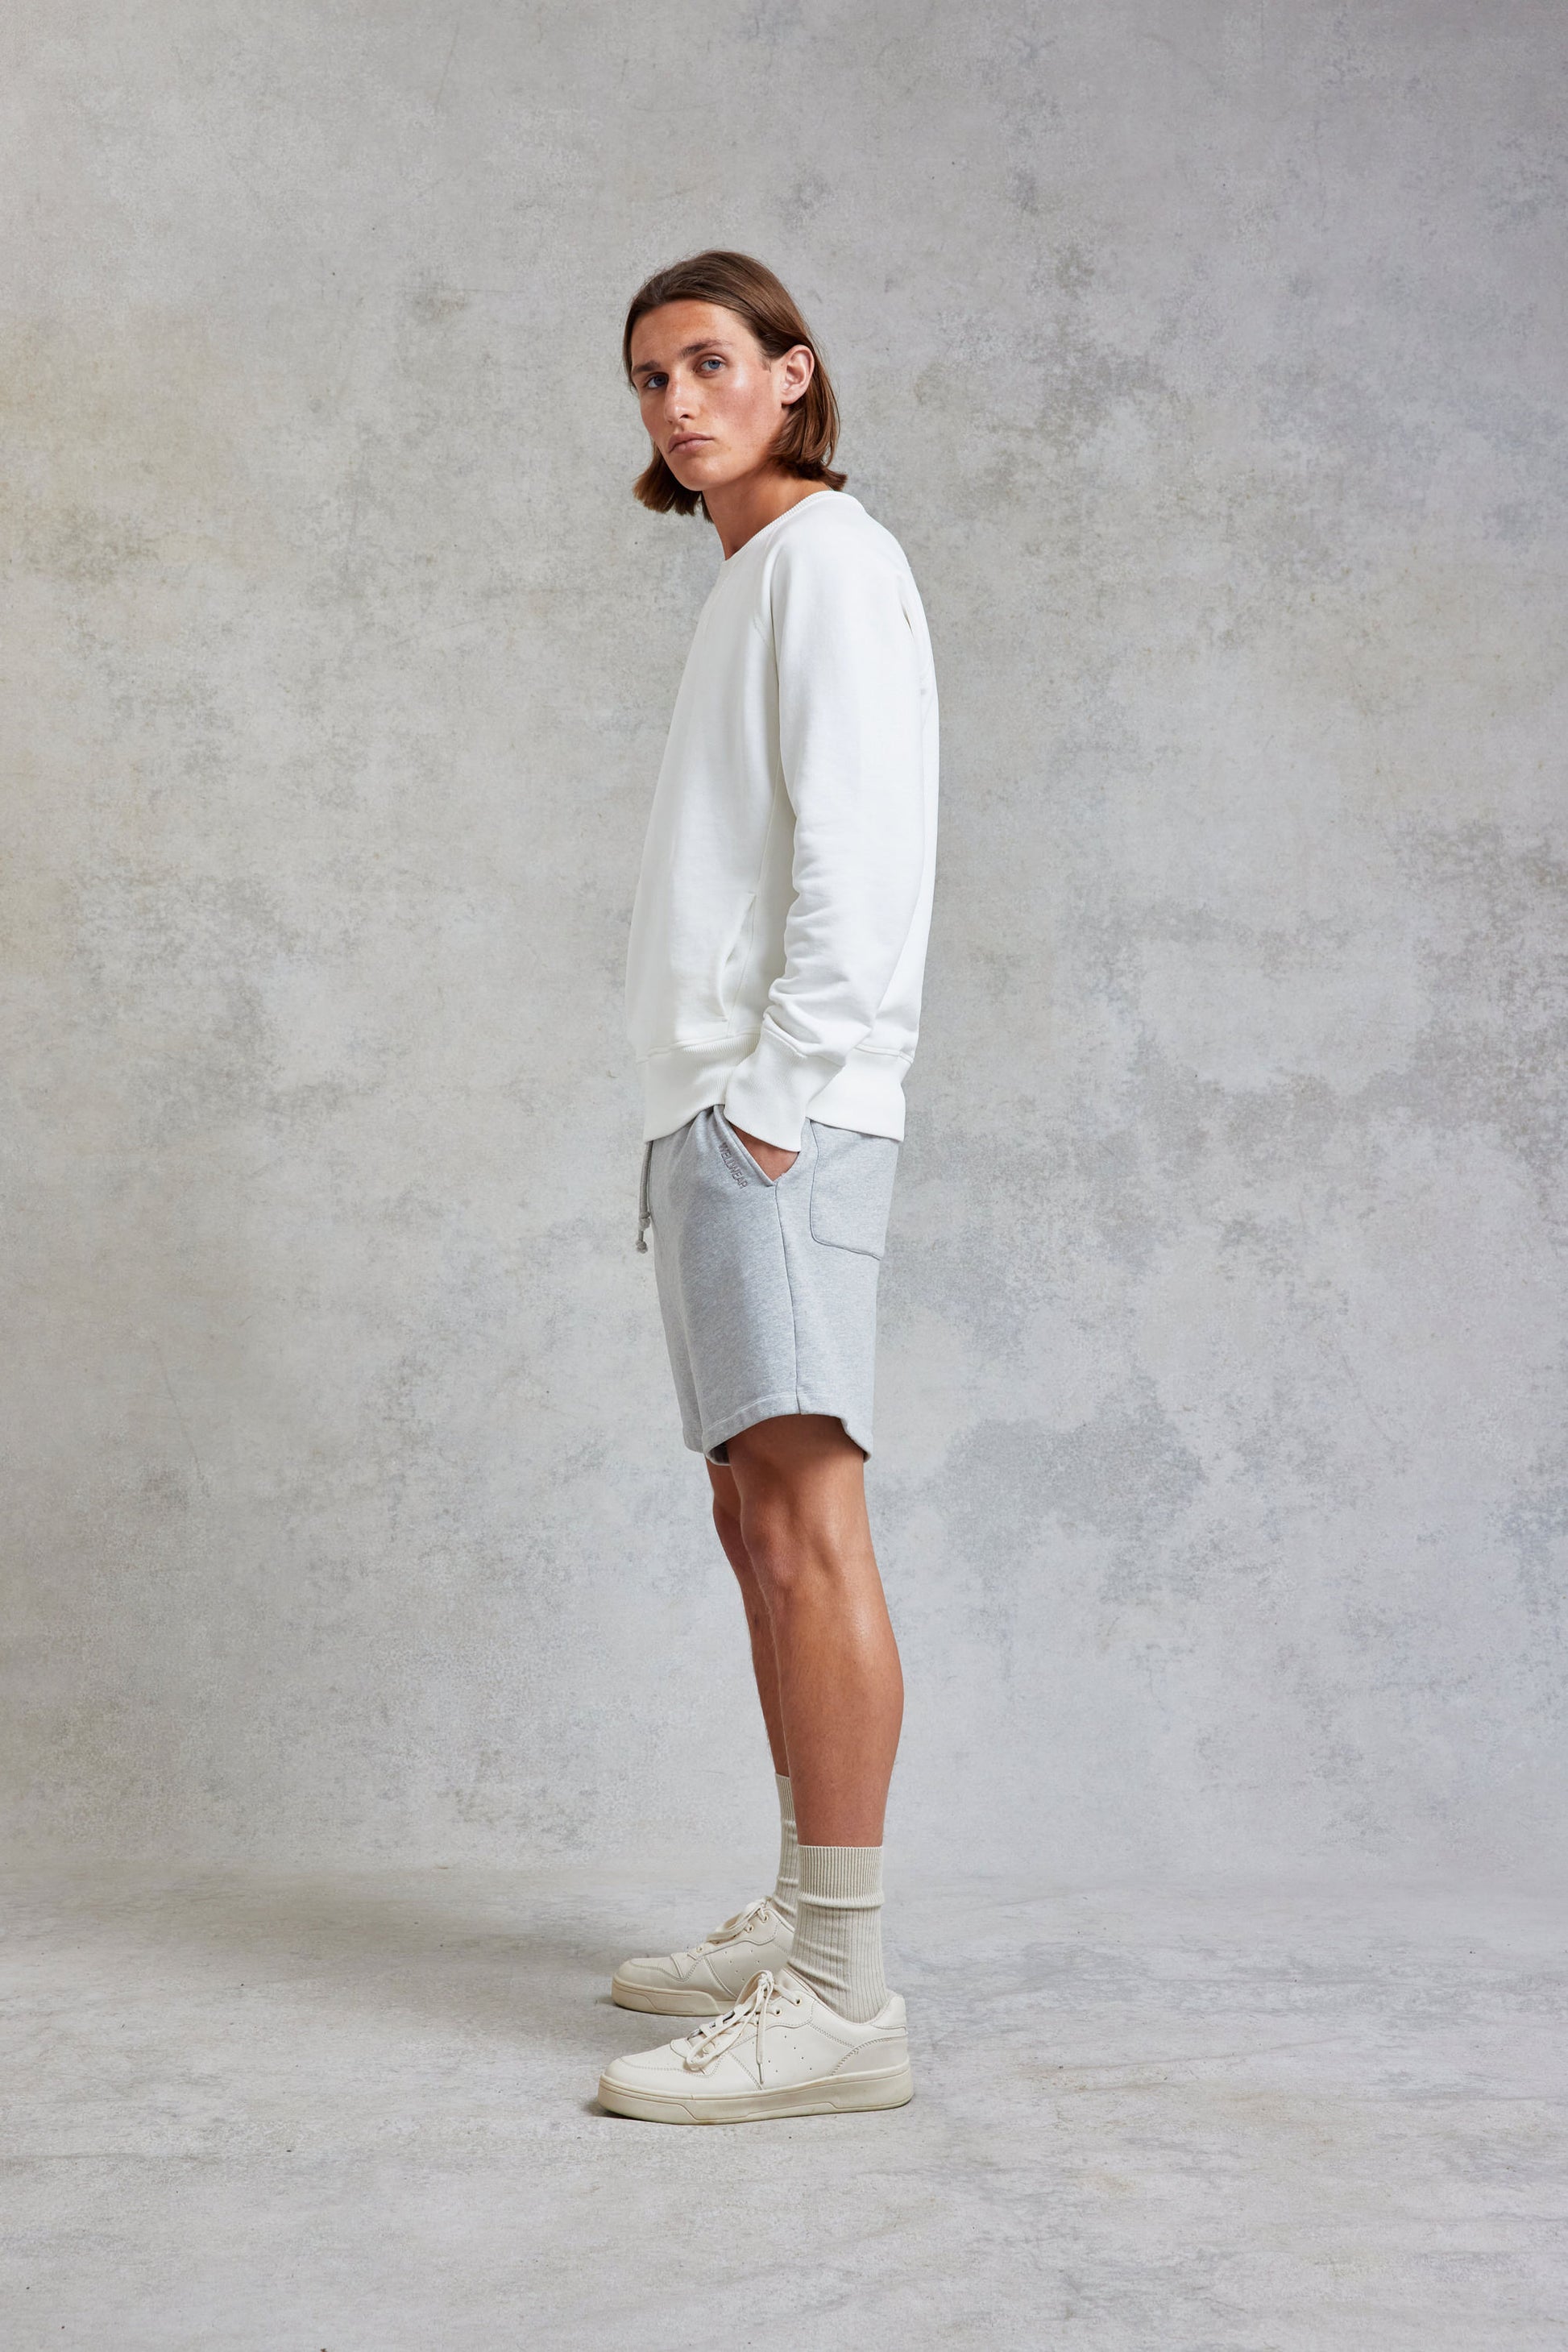 David | Wellwear Jogger Marl Grey Gandy Shorts- Ultimate